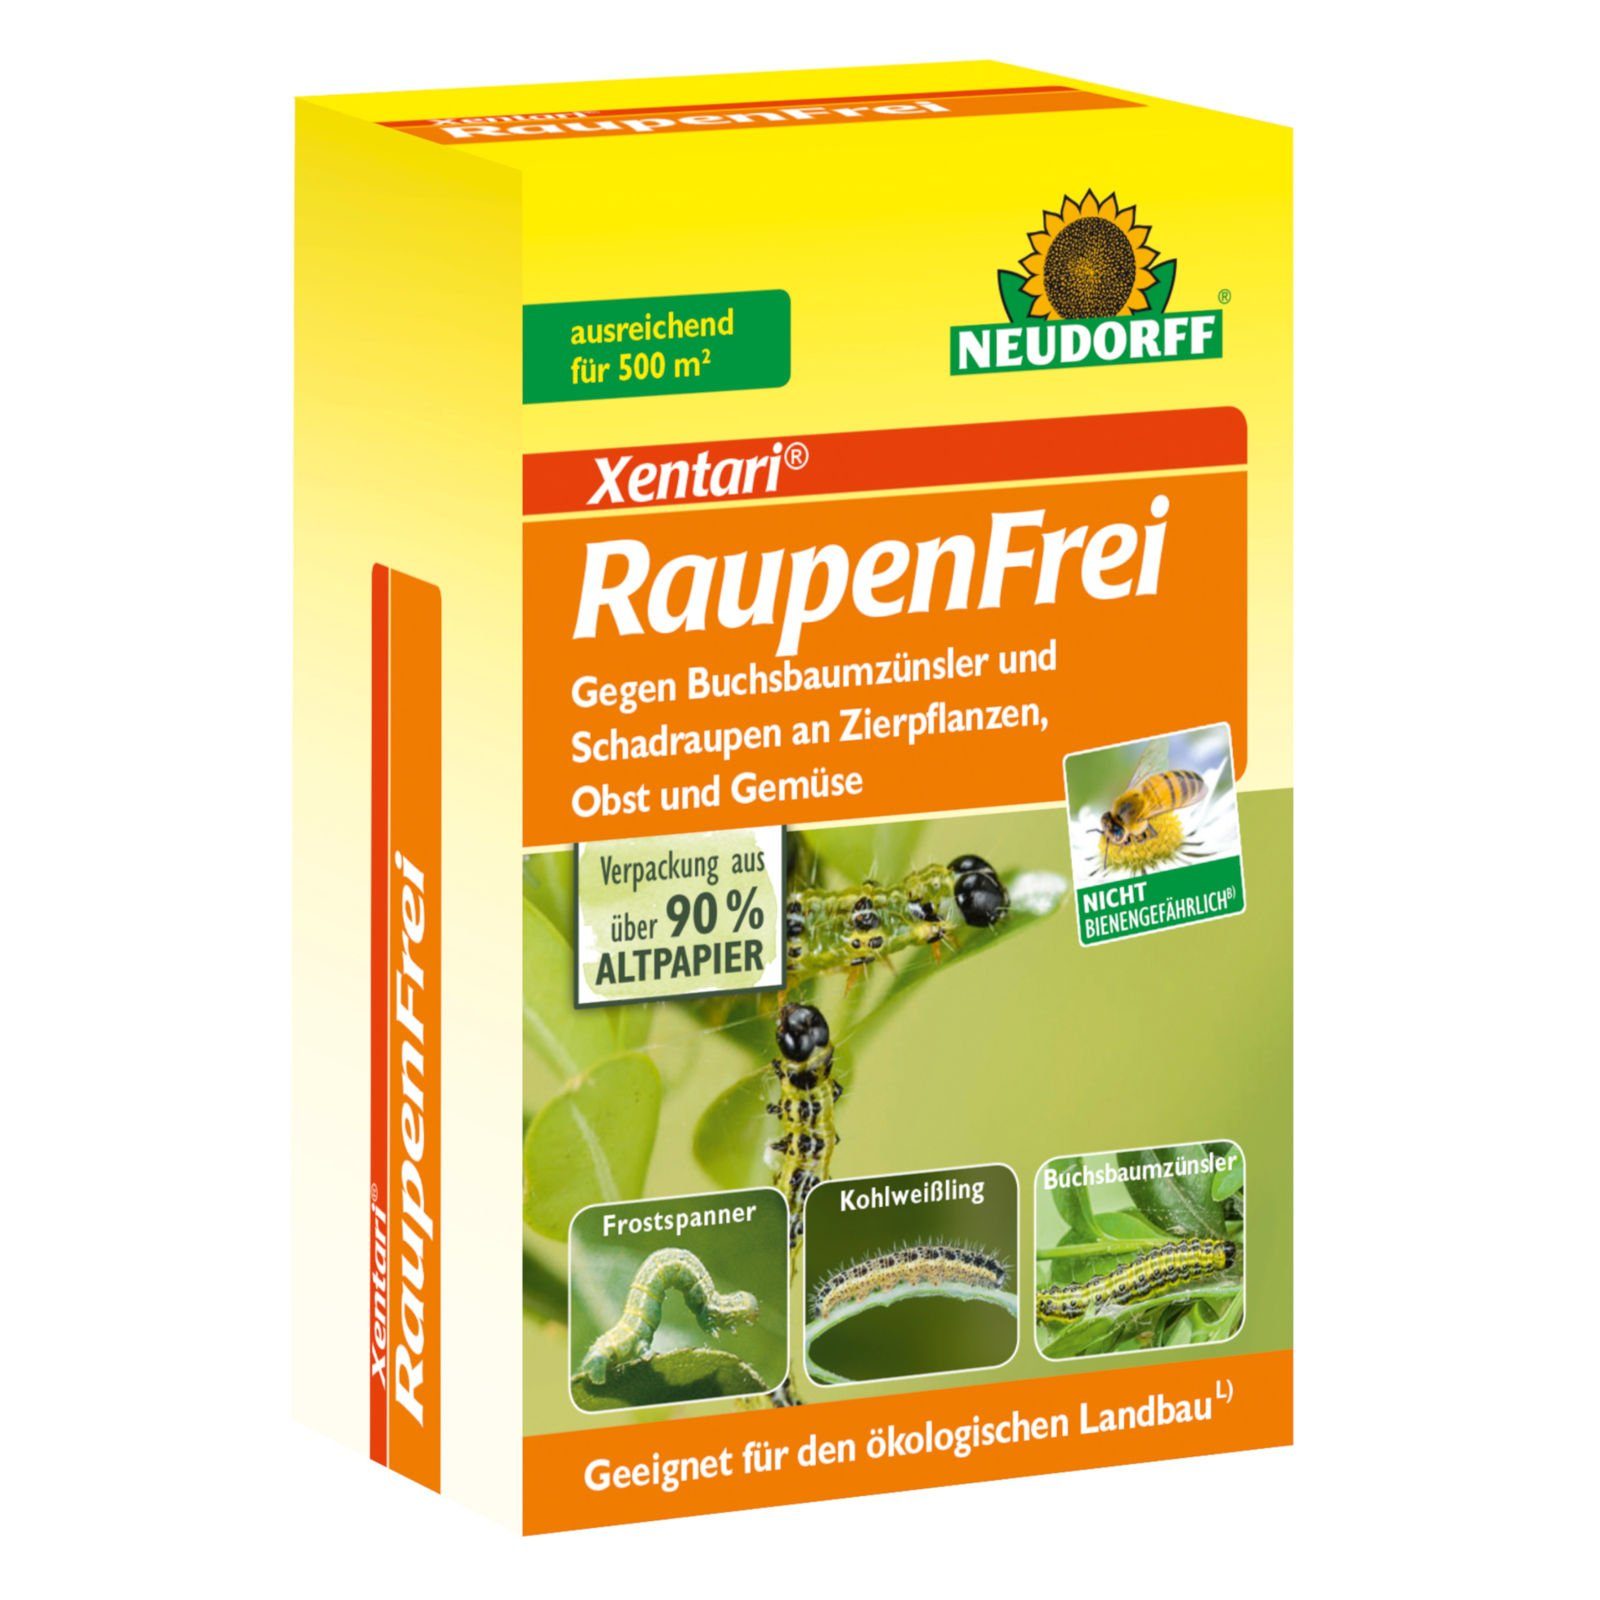 Neudorff Insektenvernichtungsmittel Raupenfrei XenTari - 6x 25 g